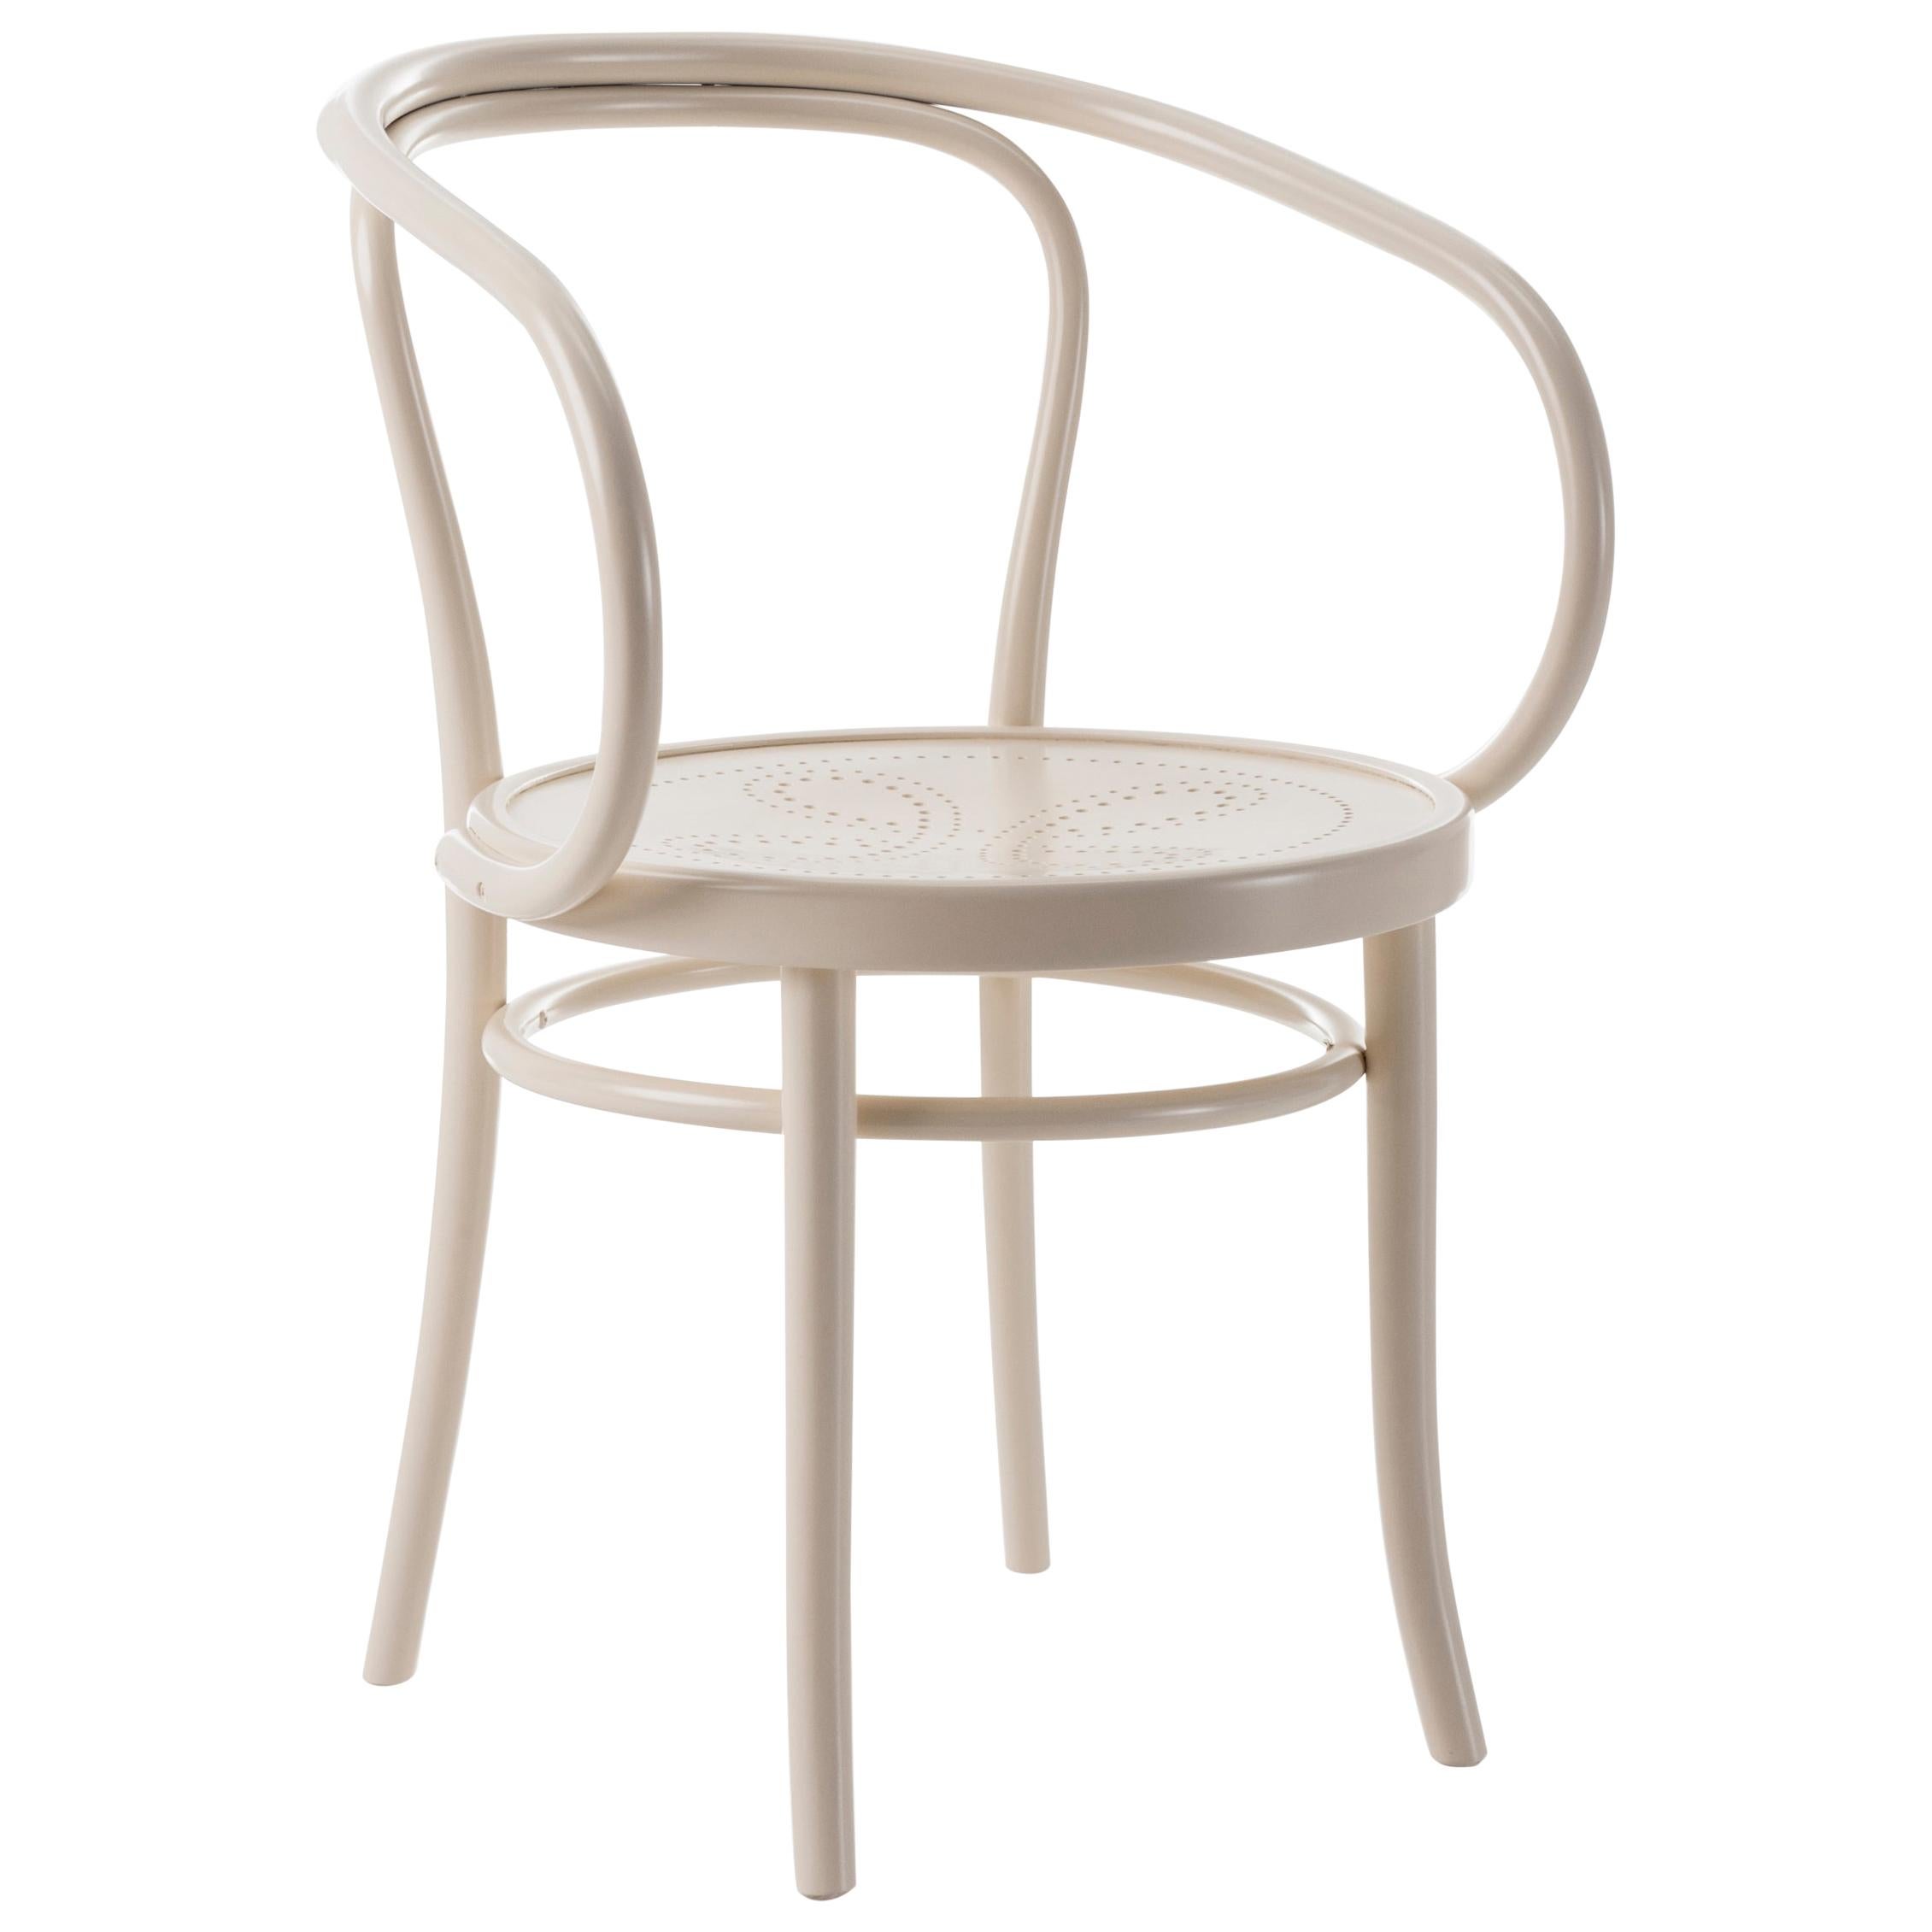 Gebrüder Thonet Vienna GmbH Wiener Stuhl Chair with Perforated Plywood Seat